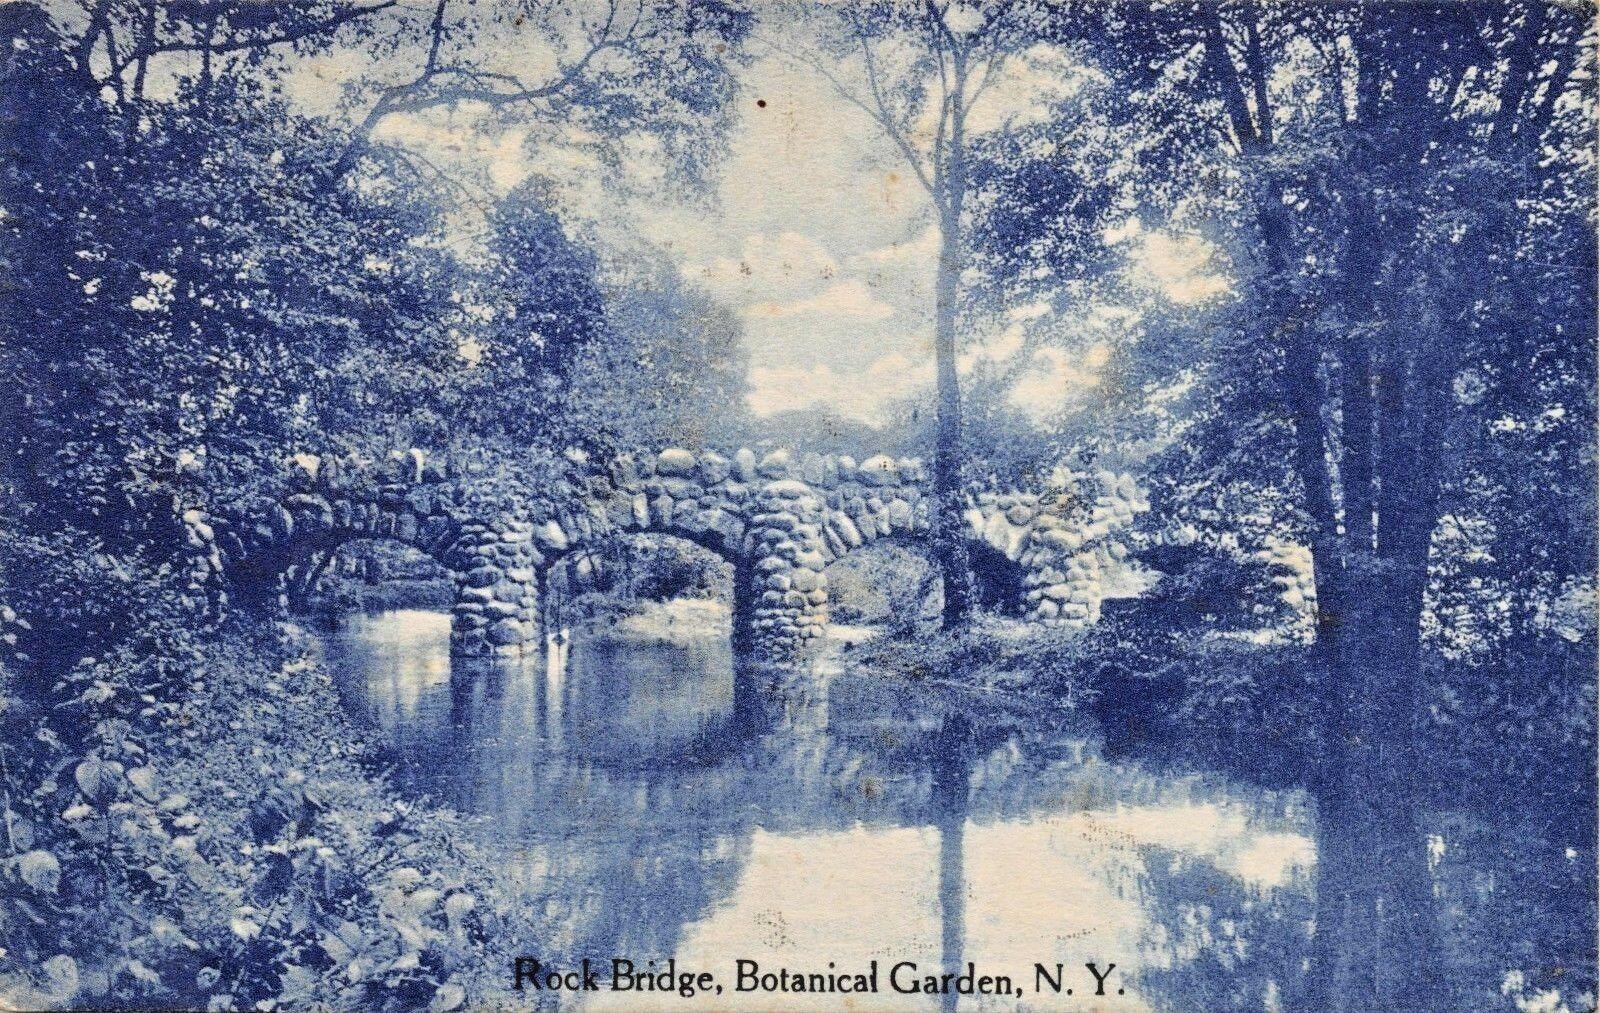 Botanical Gardens Rubble Stone Bridge Rotograph Postcard - 1912